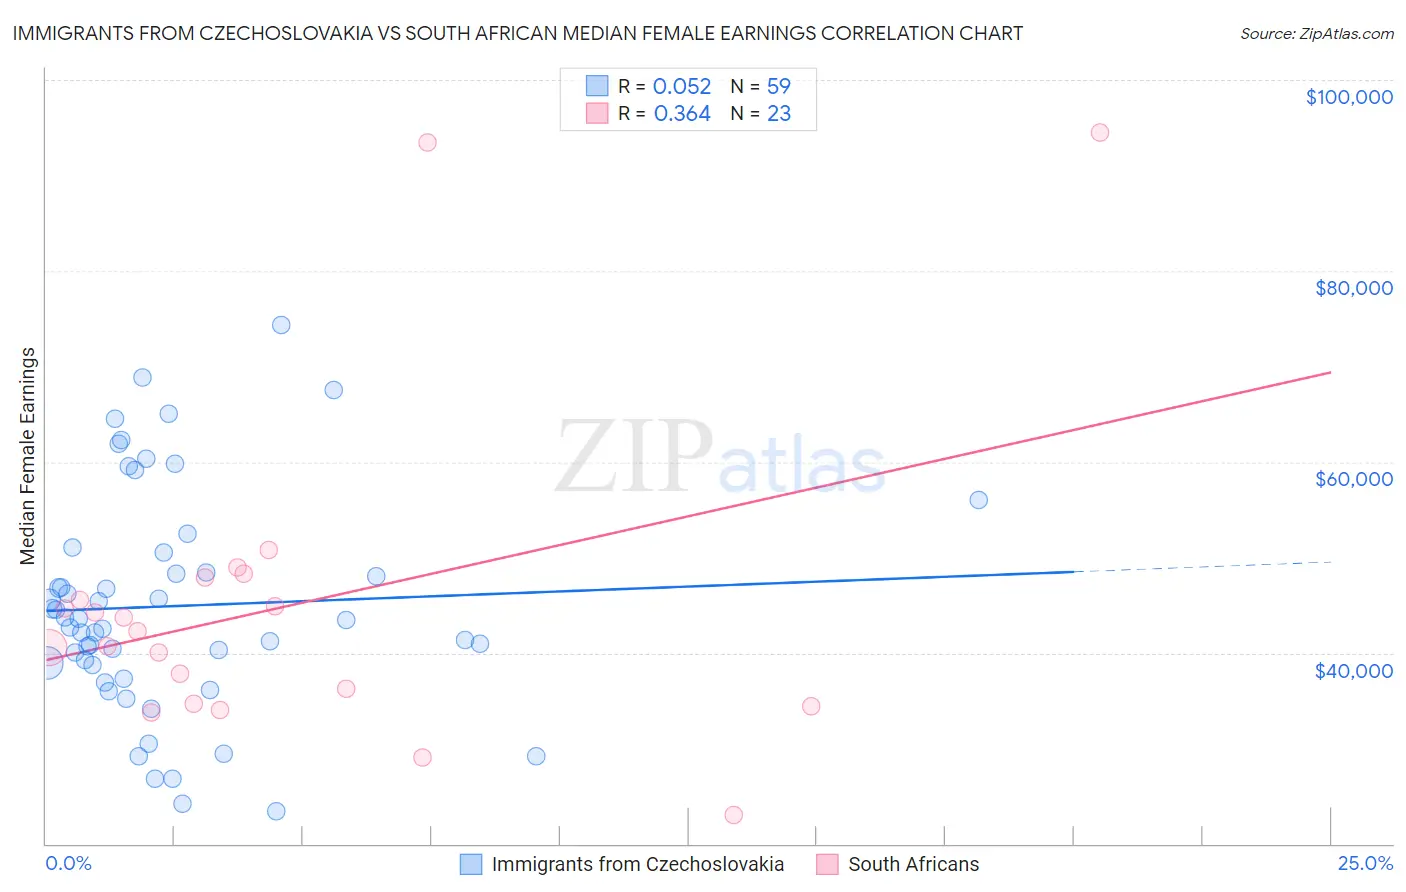 Immigrants from Czechoslovakia vs South African Median Female Earnings